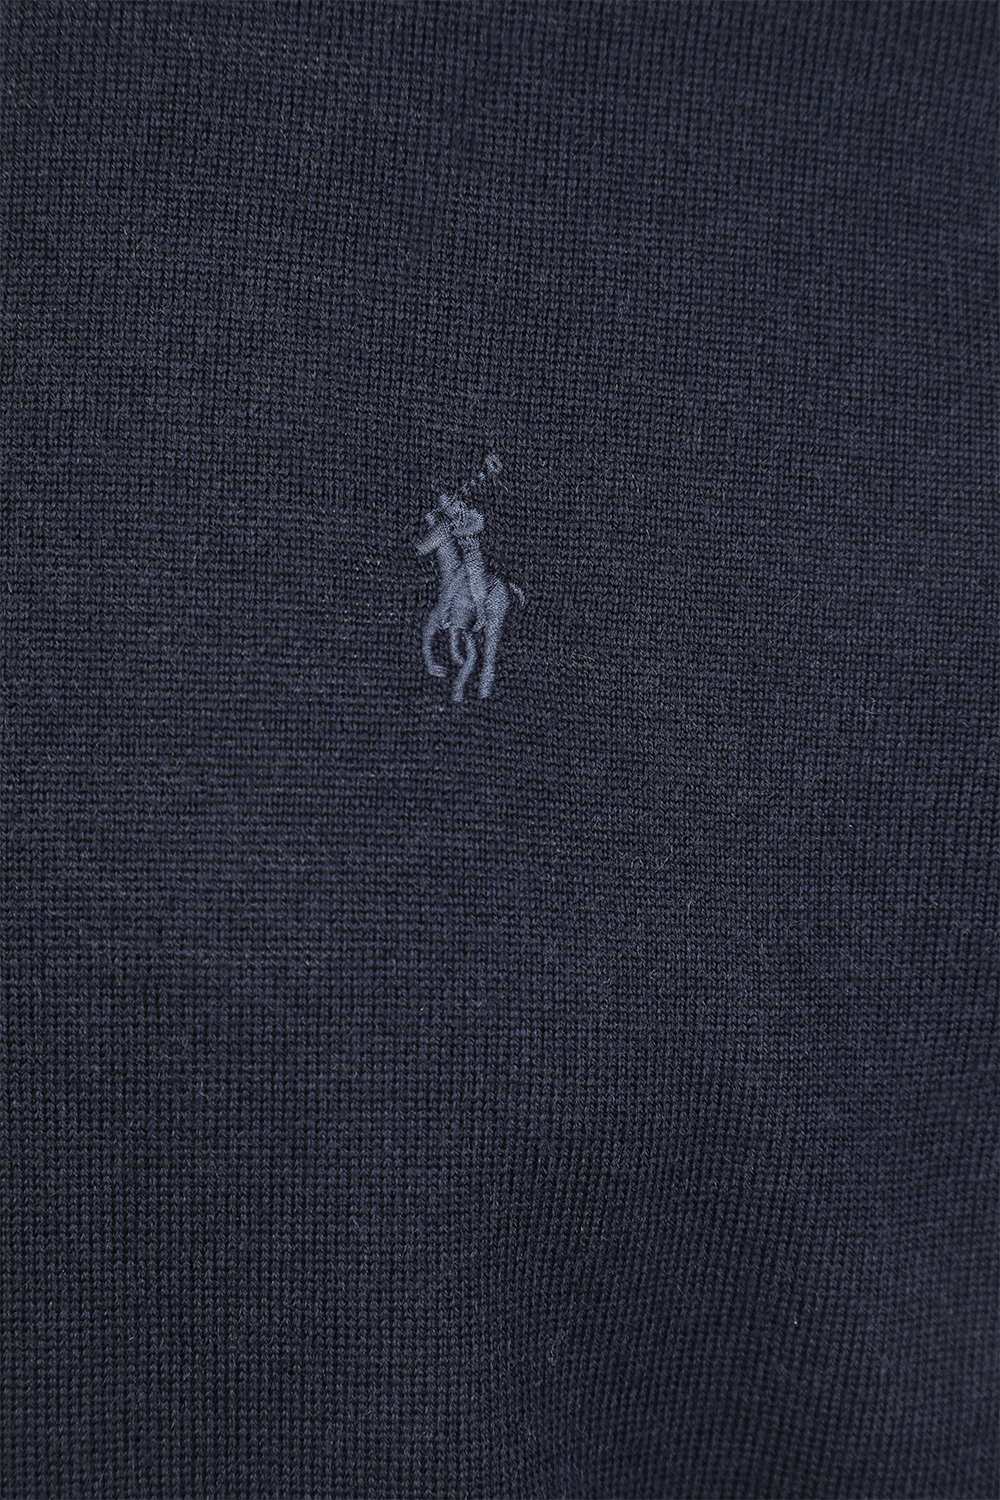 Logo Sweater in Black POLO RALPH LAUREN